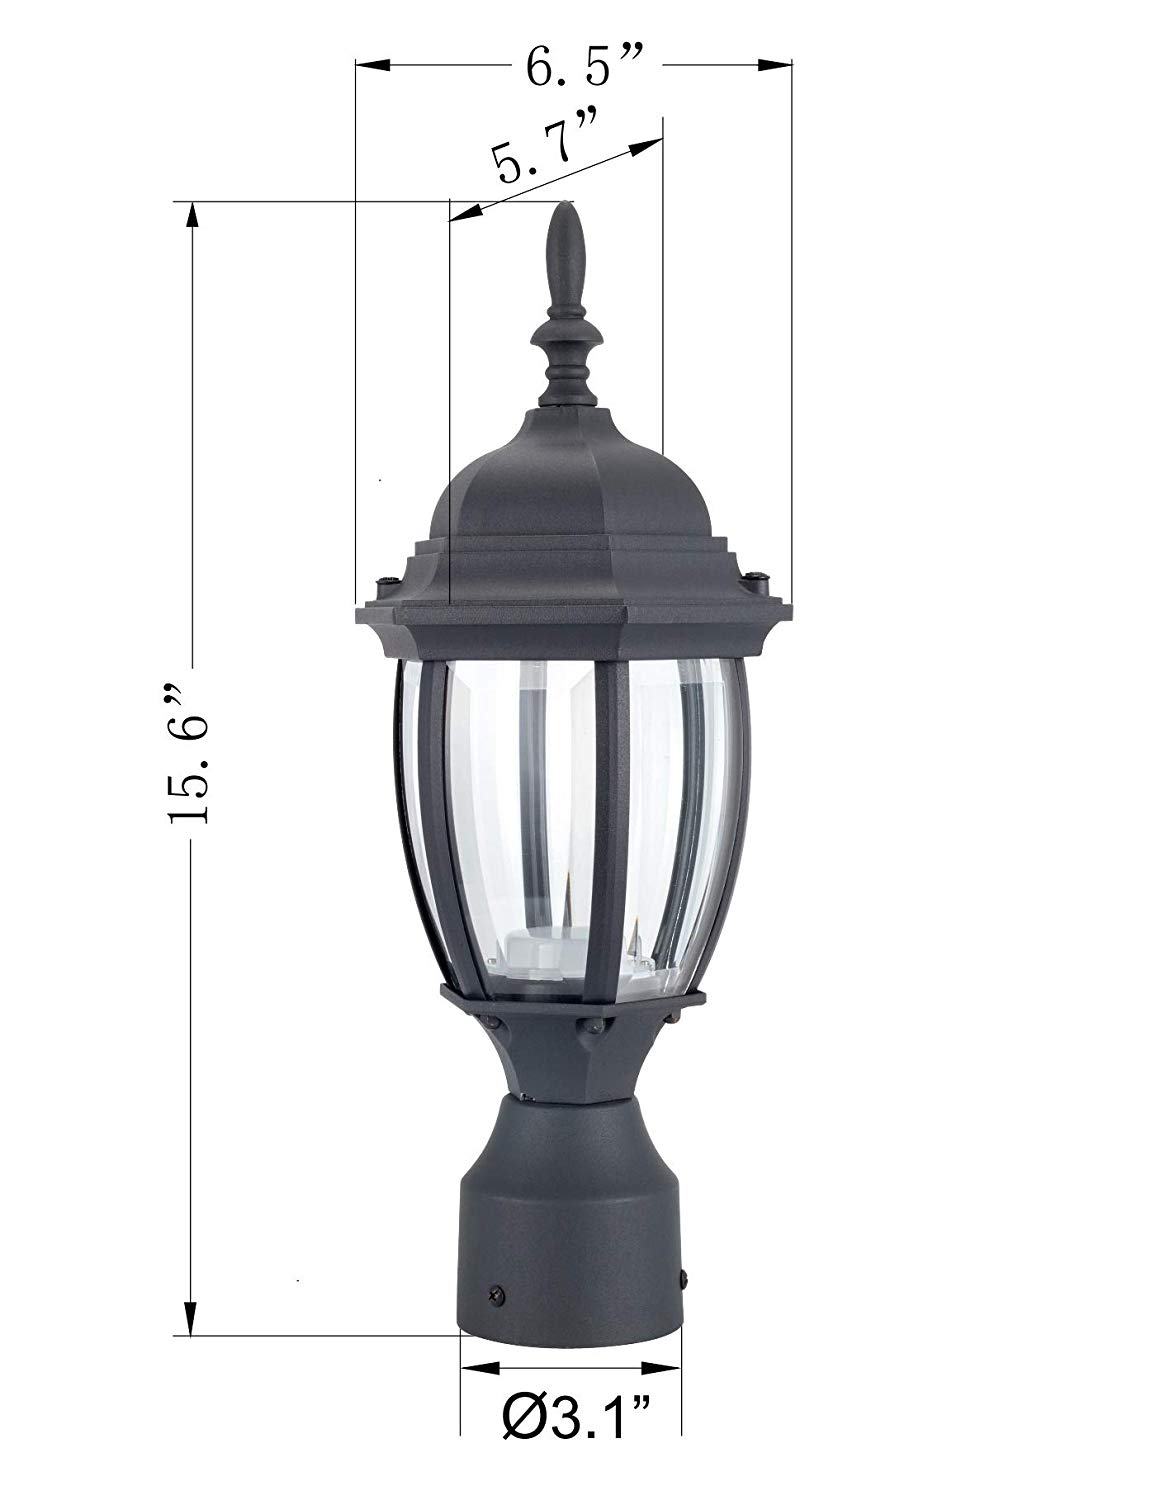 LIT-PaTH LED Outdoor Post Light Pole Lantern Lighting Fixture, 9.5W 800 Lumens, 5000K Daylight White, Aluminum Housing Plus Glass, Matte Black Finish